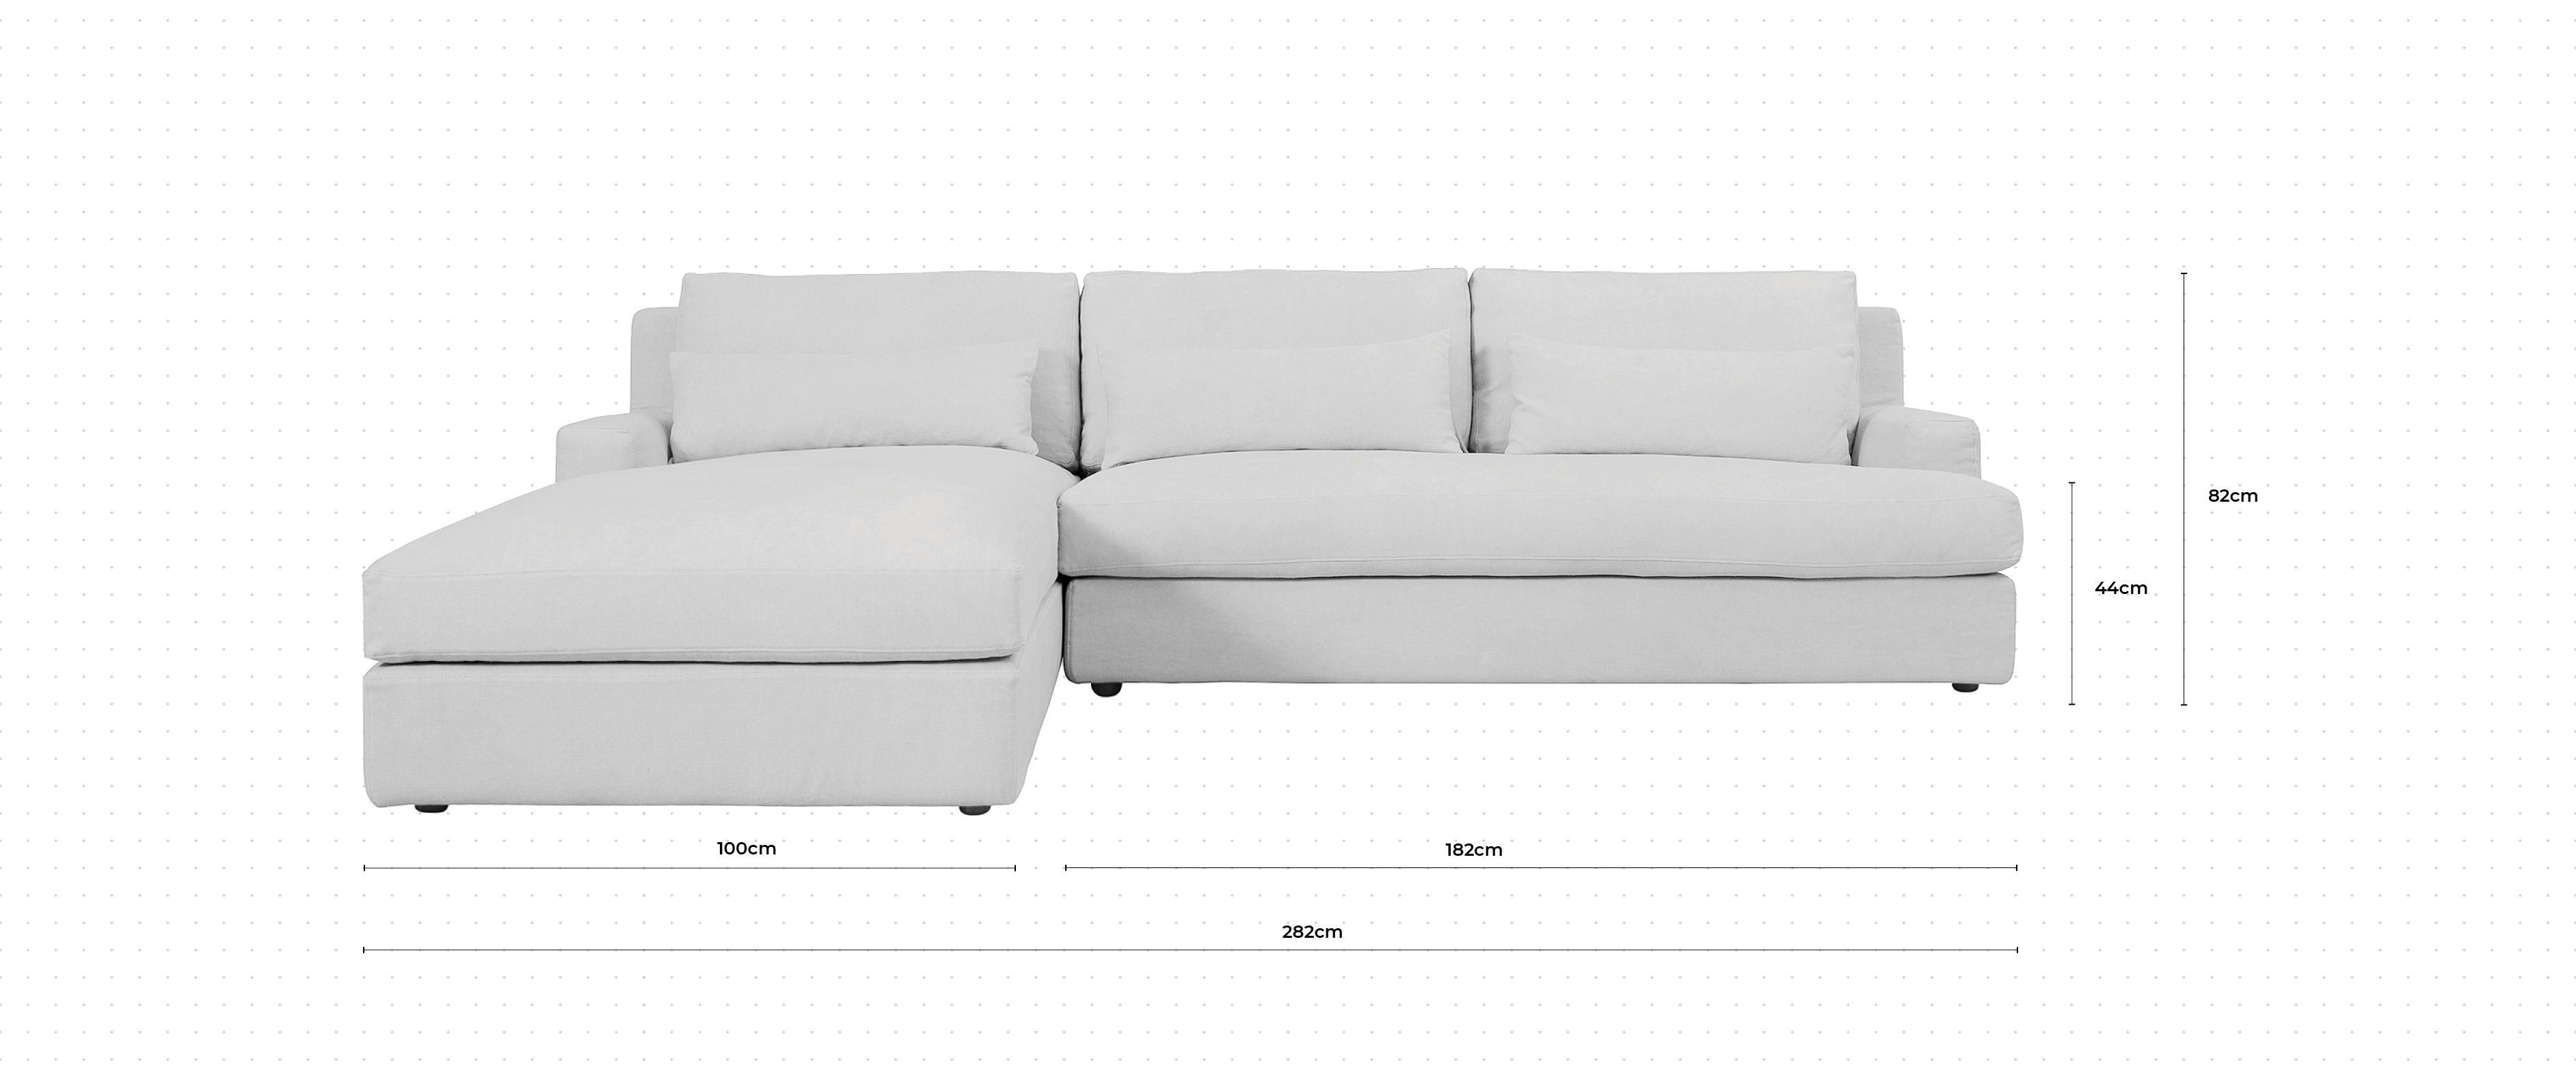 Panama Large Chaise Sofa LHF dimensions